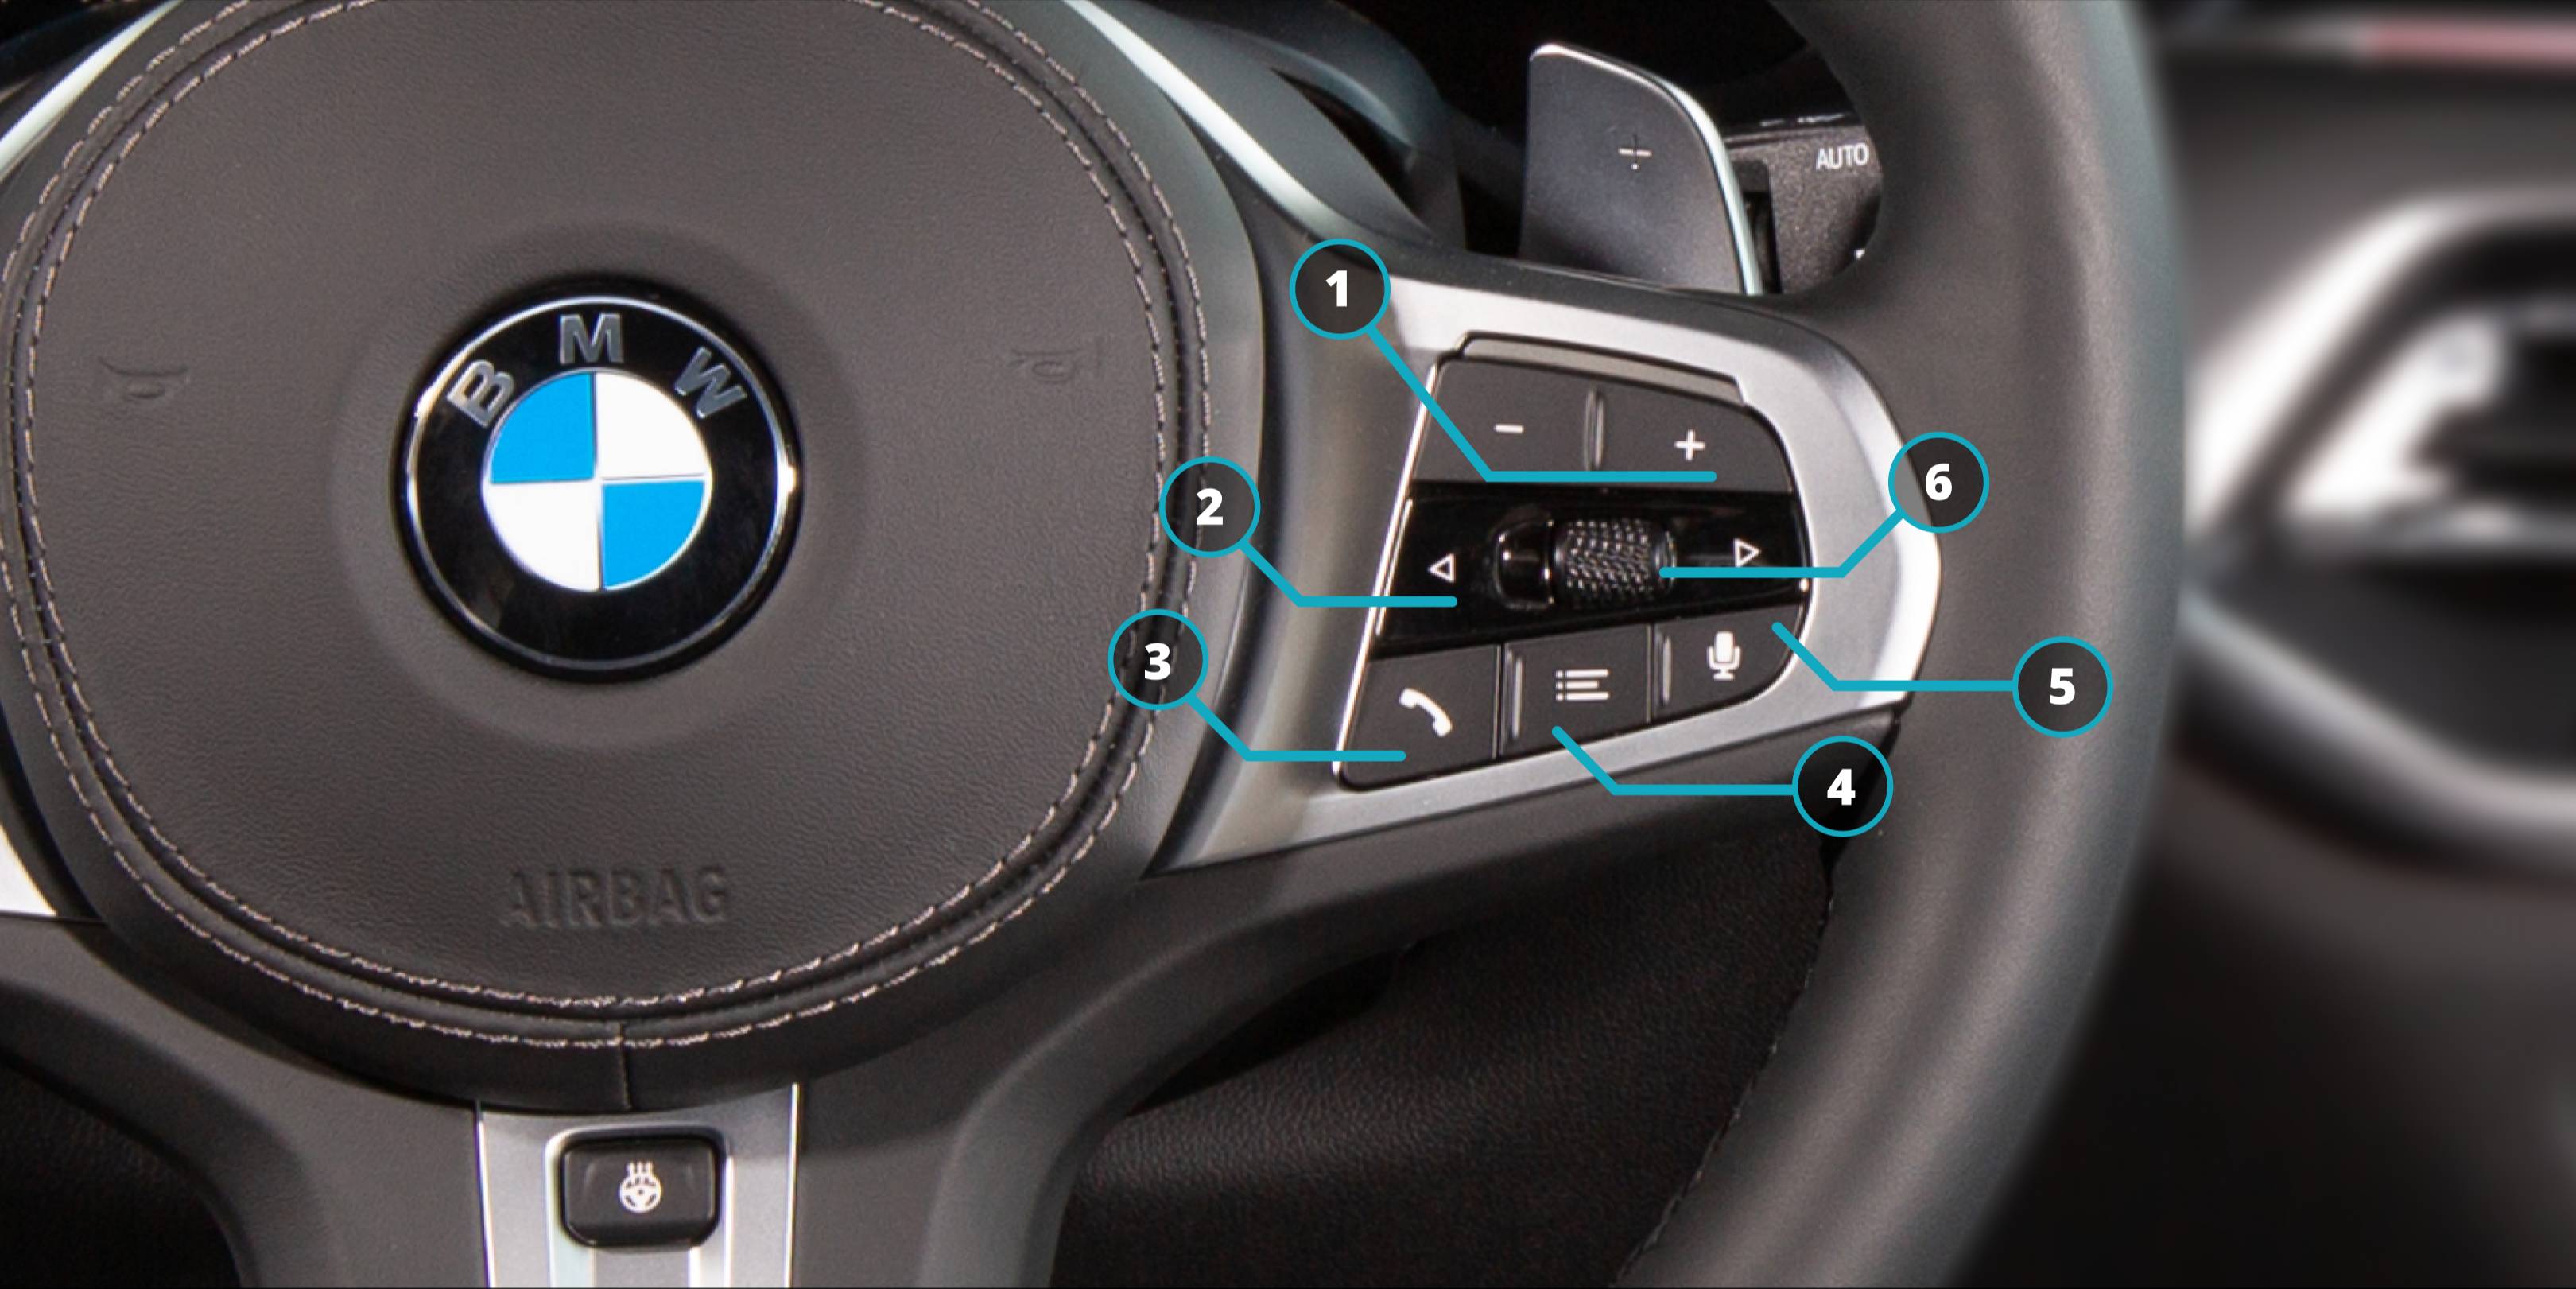 Right side – BMW audio control